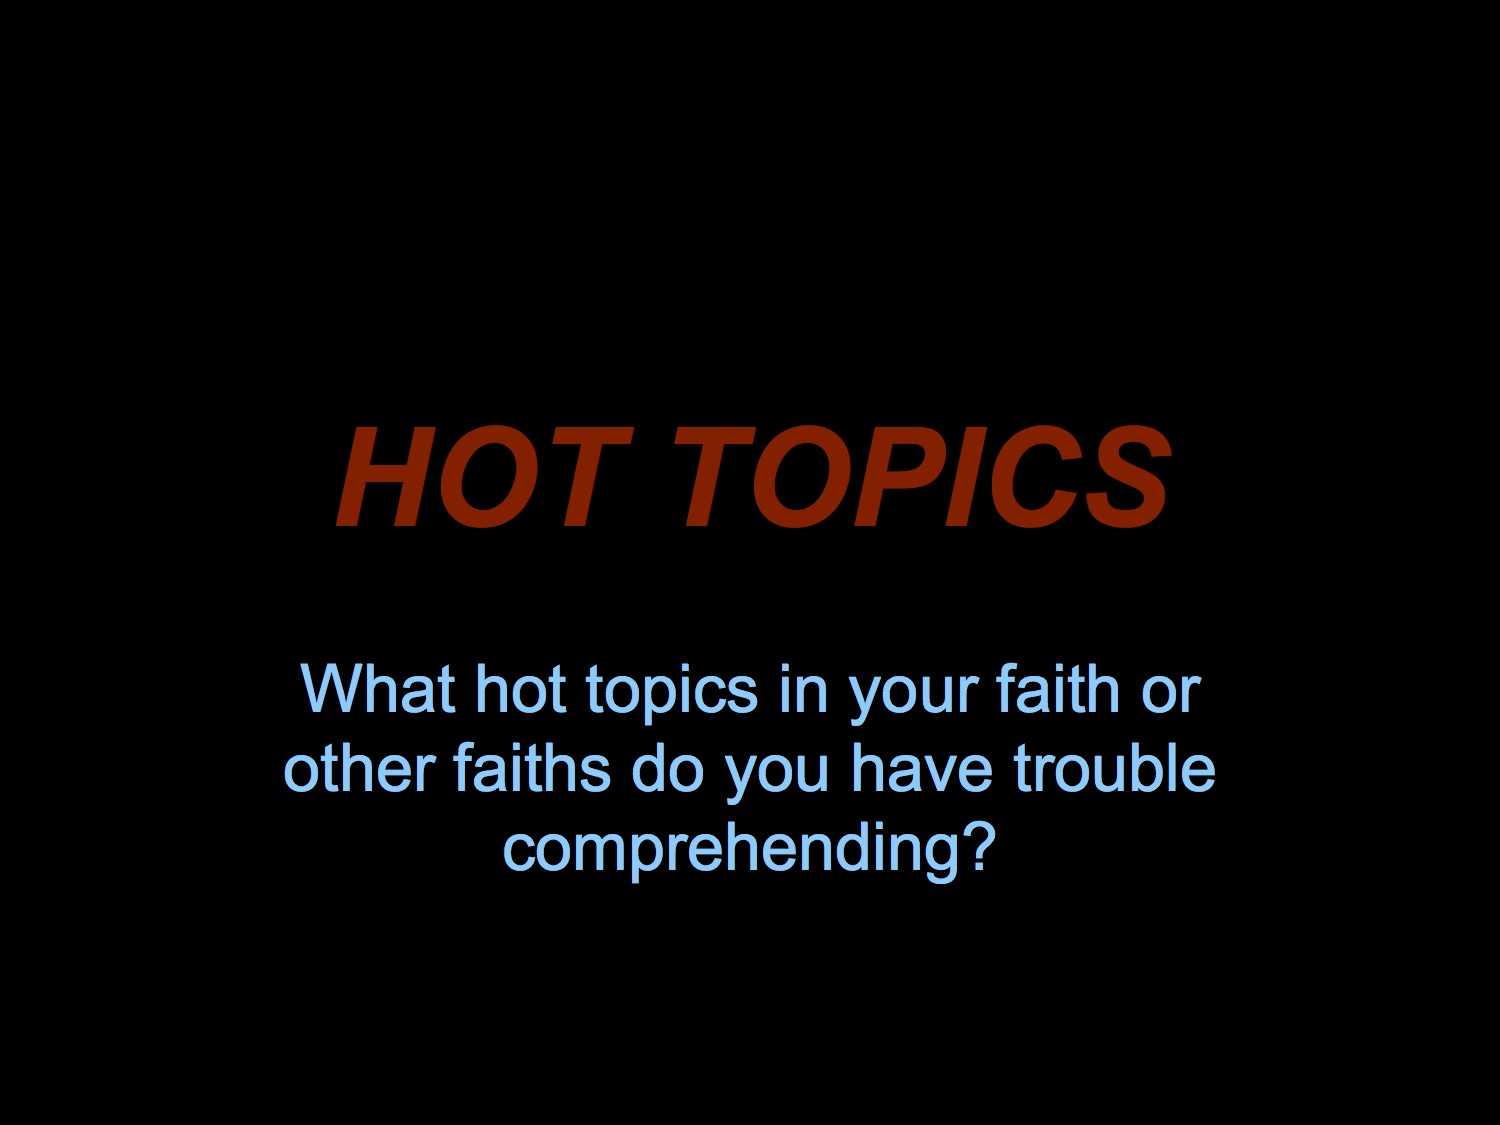 Hot topics top image.jpg